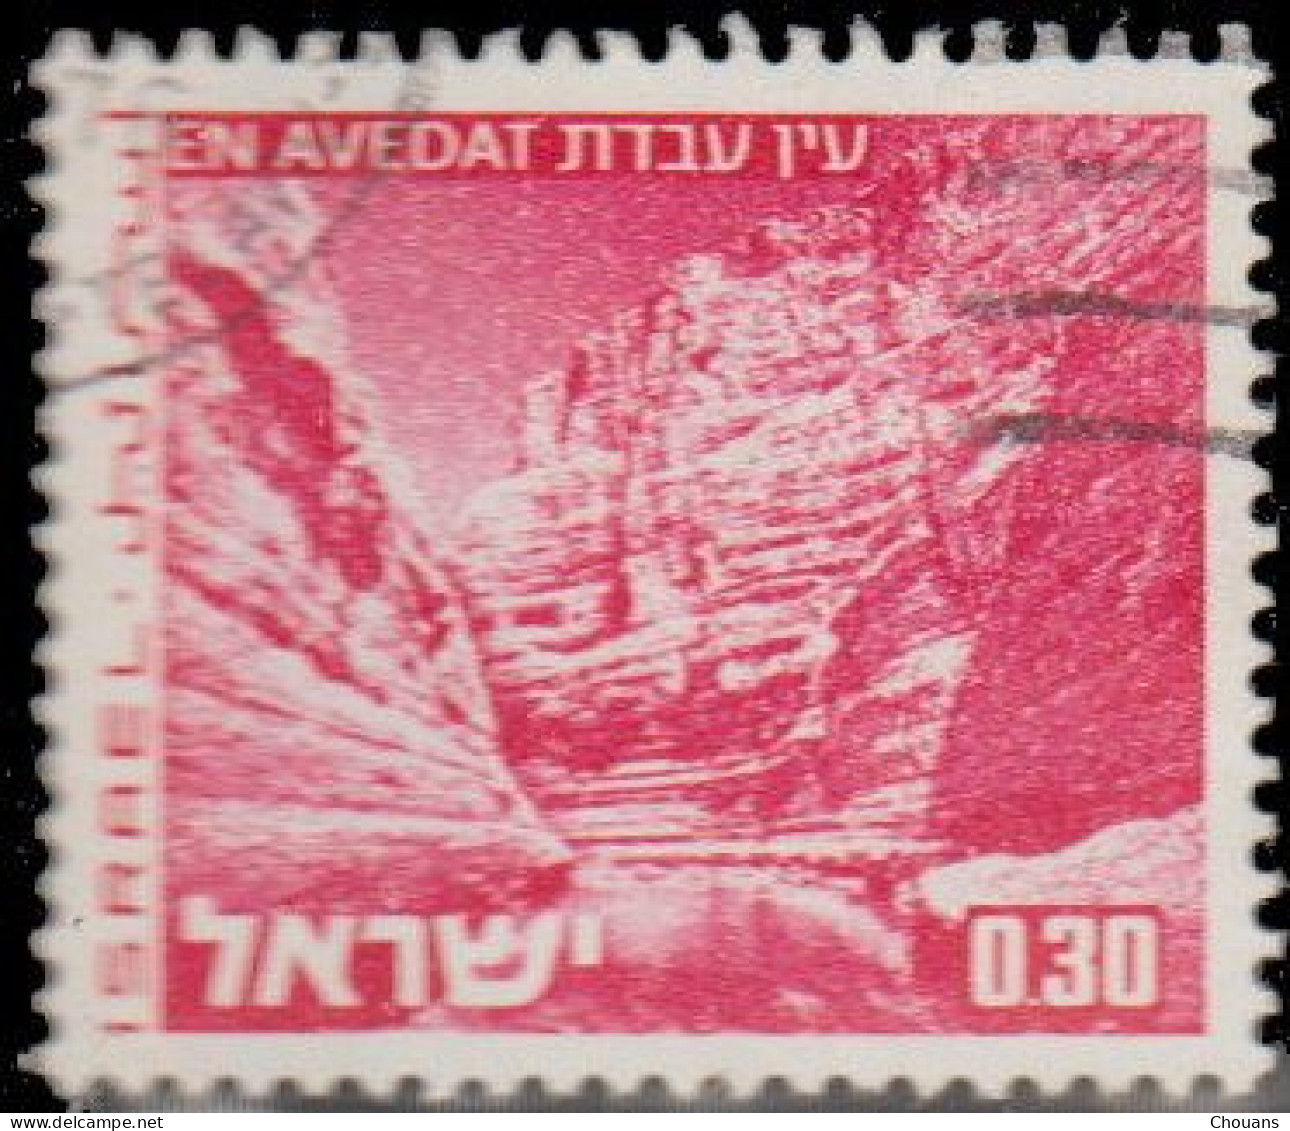 Israël 1971. ~ YT 463 - En Avedat - Gebraucht (ohne Tabs)